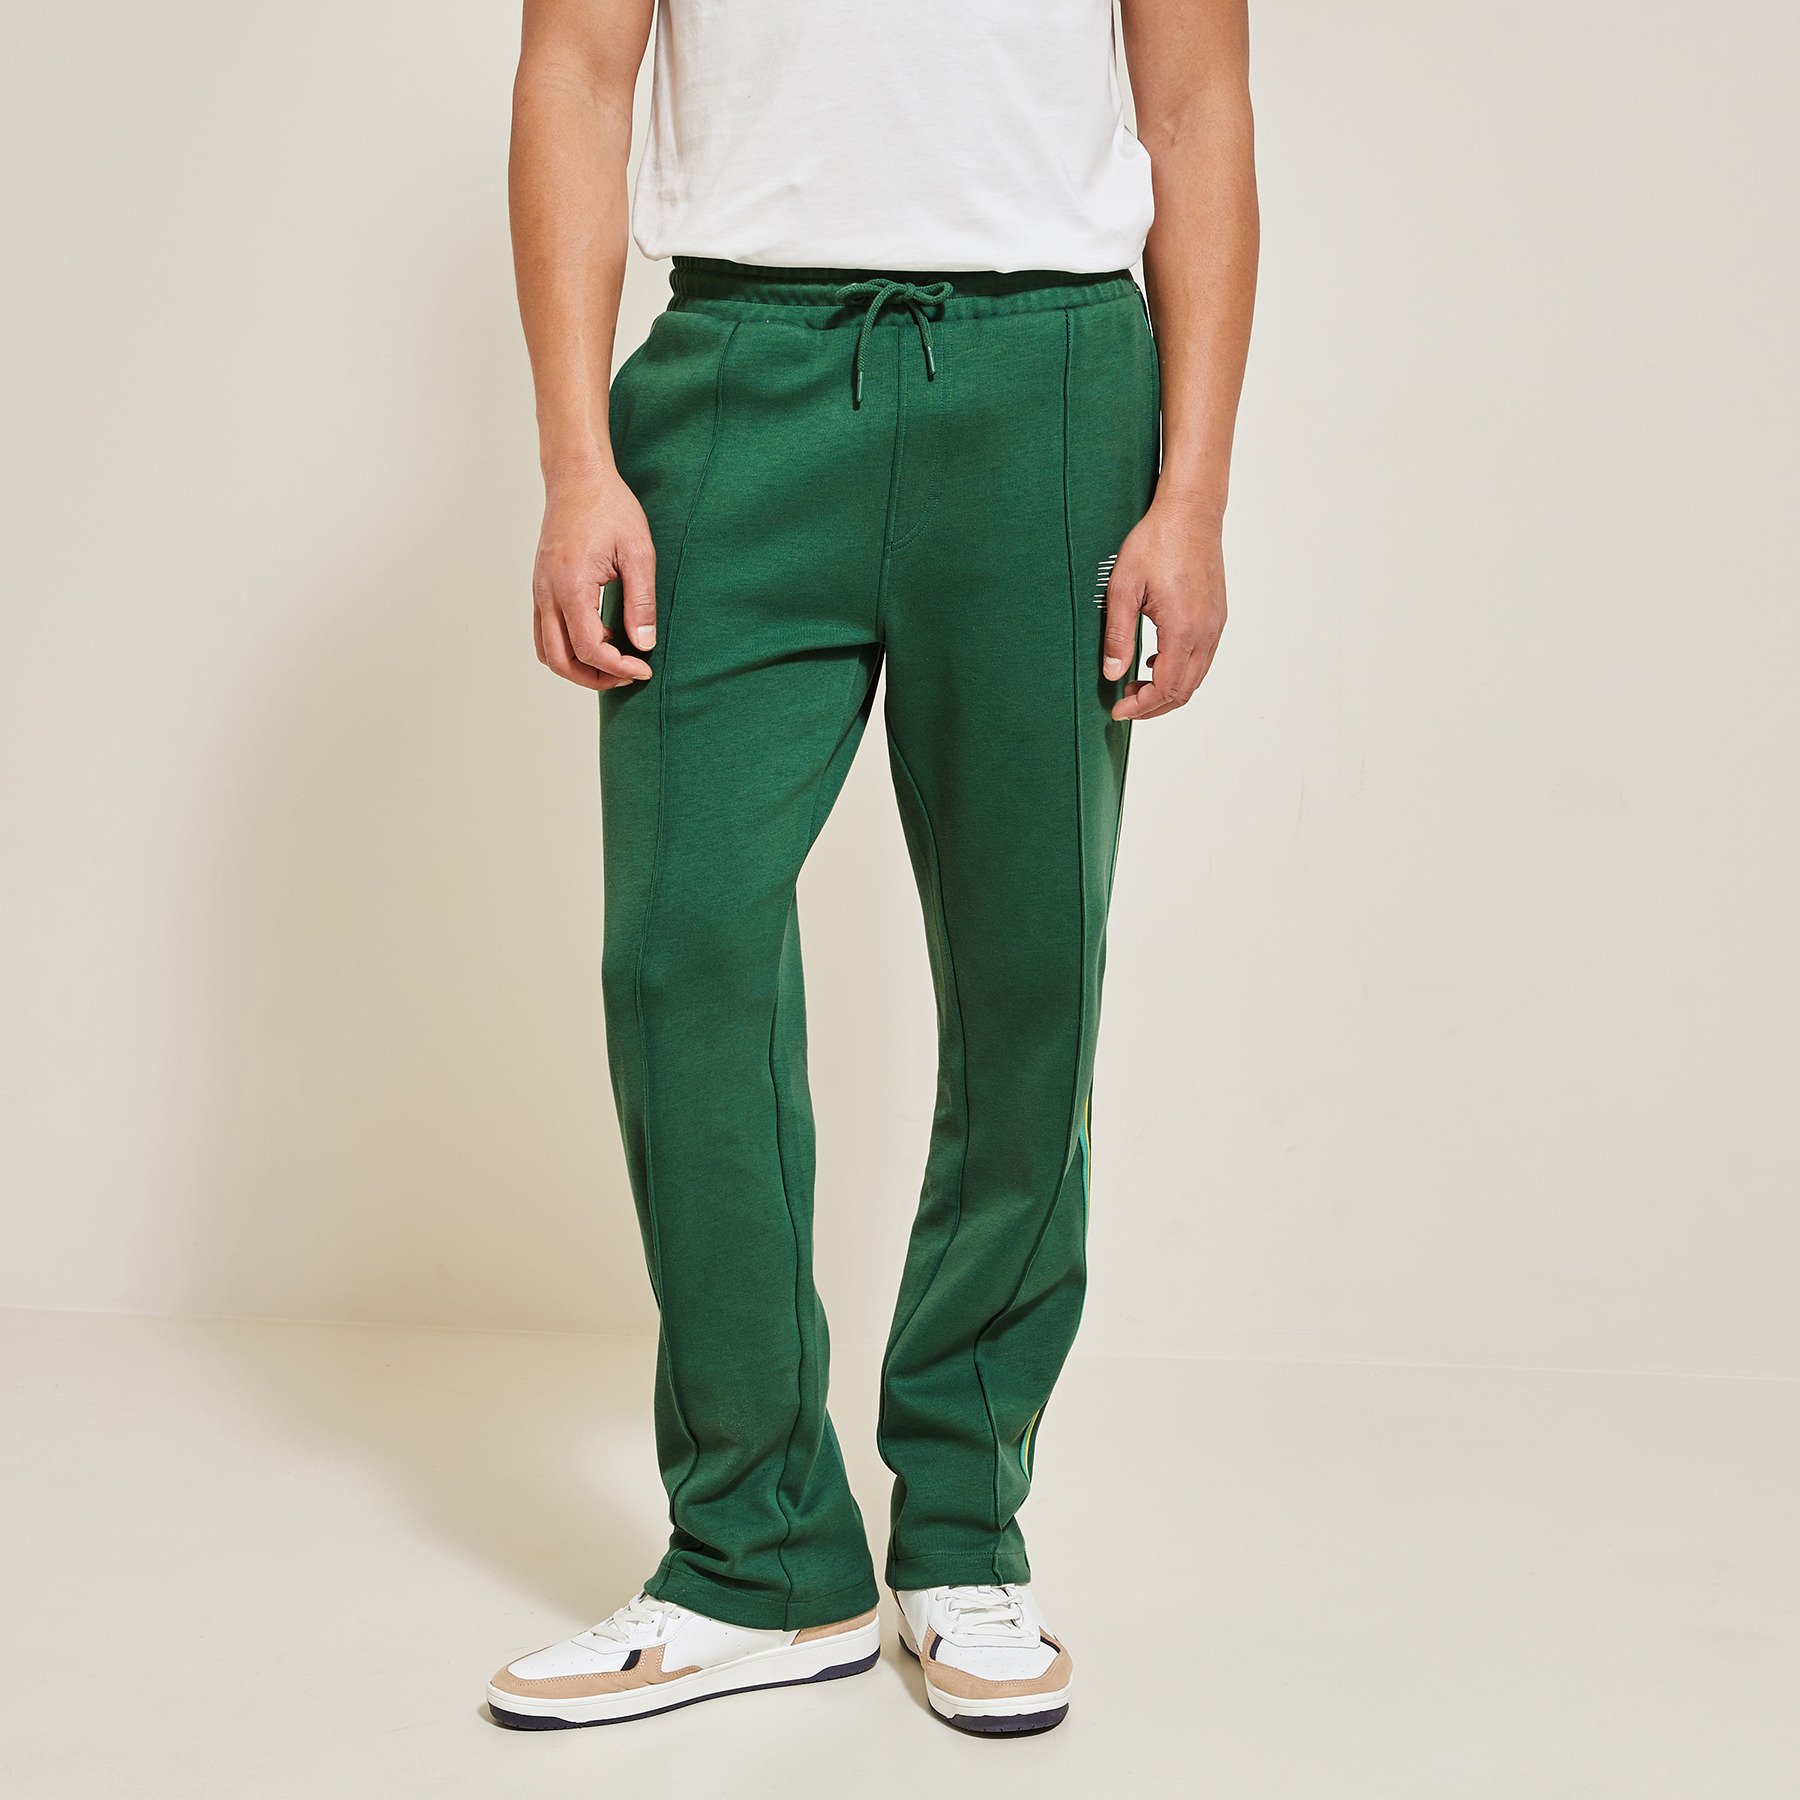 Pantalon de jogging Smiley® Originals Vert/Kaki XS 65% Coton, 35% Polyester Homme